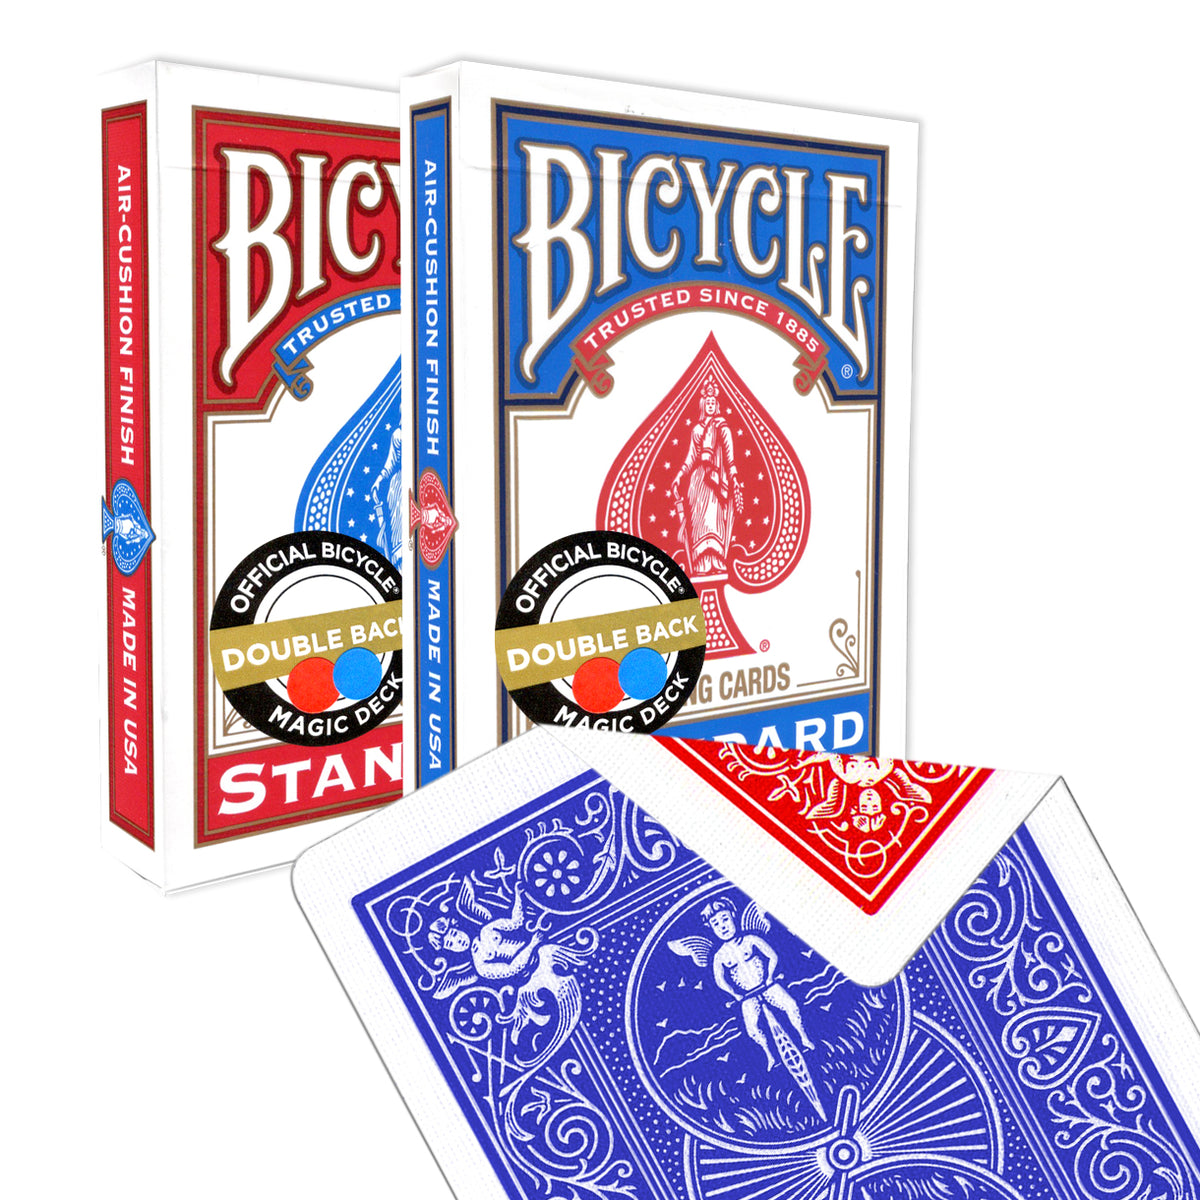 Half Red Half Blue Back Split gaff card printed on Bicycle stock